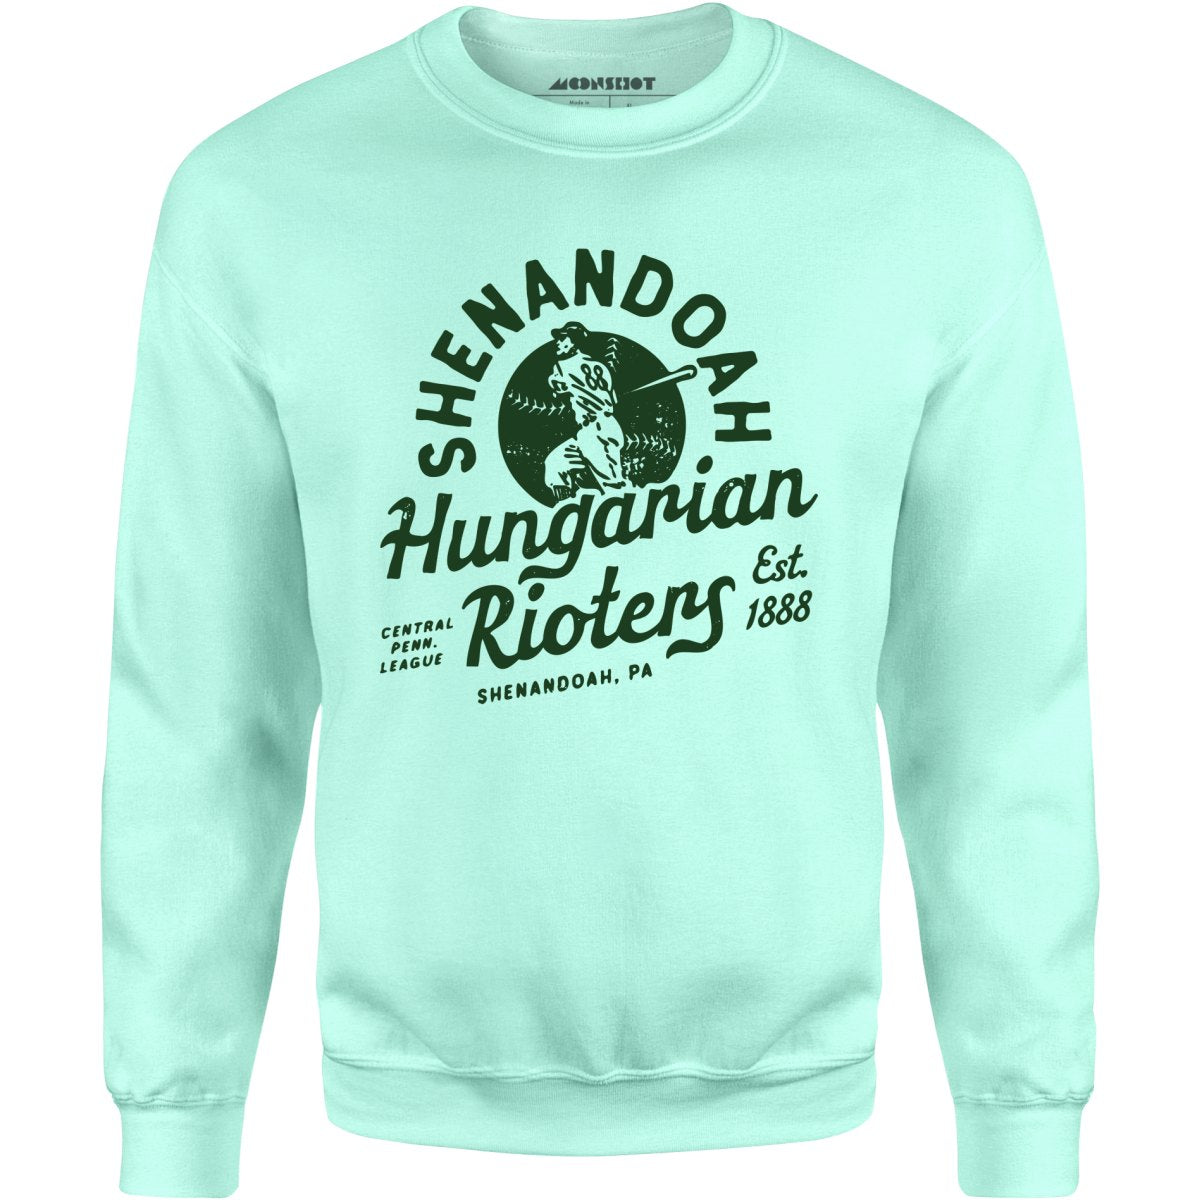 Shenandoah Hungarian Rioters - Pennsylvania - Vintage Defunct Baseball Teams - Unisex Sweatshirt